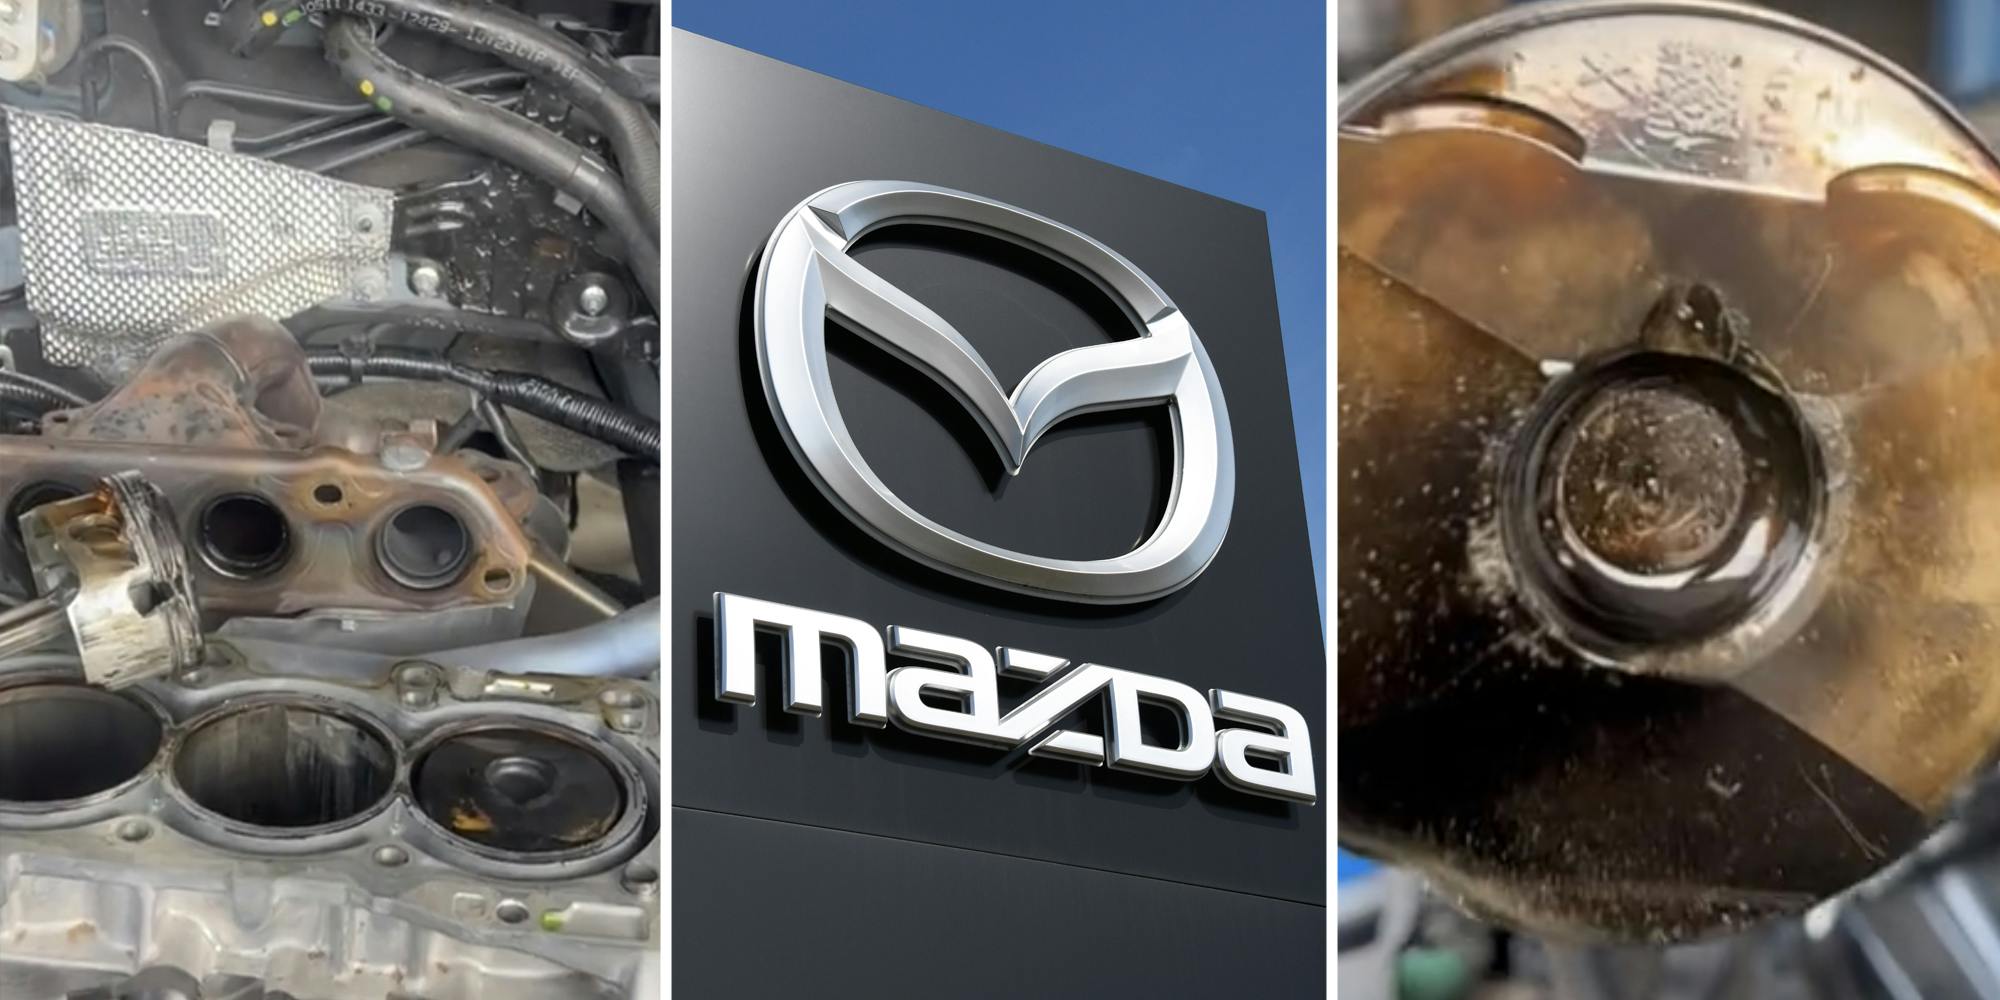 Engine(l), Mazda(c), Oil(r)